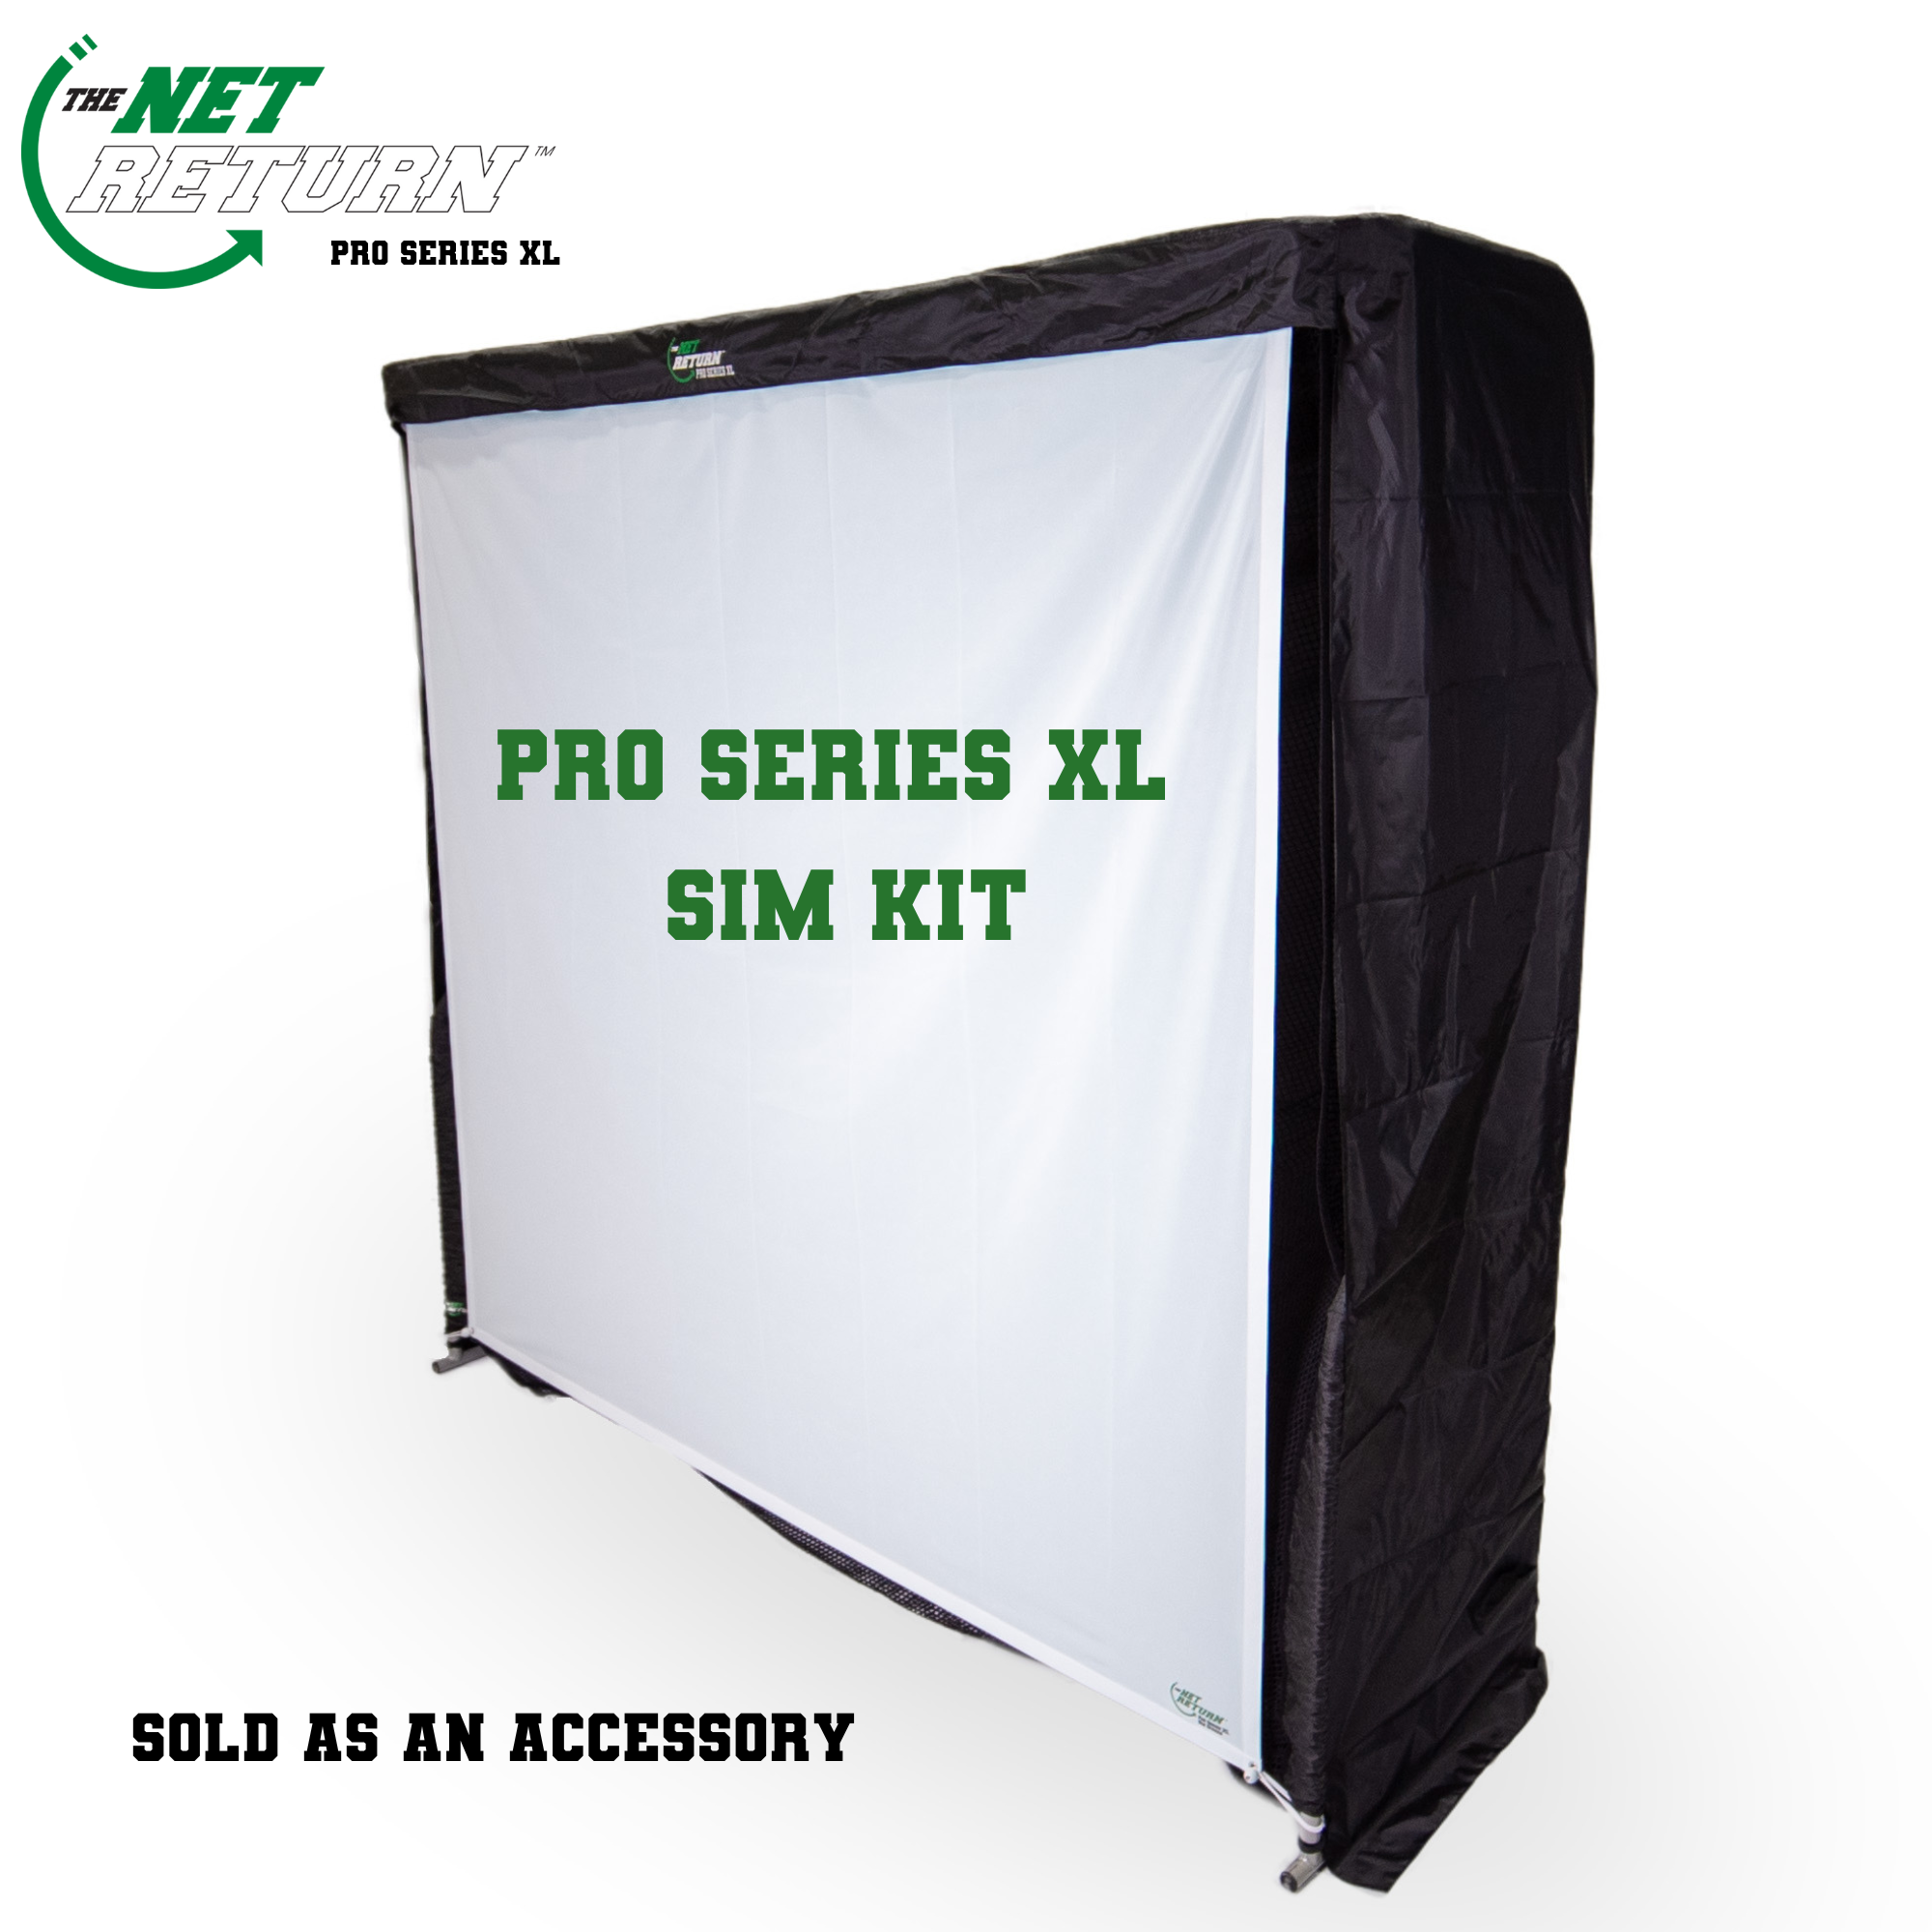 Pro XL Sim Kit